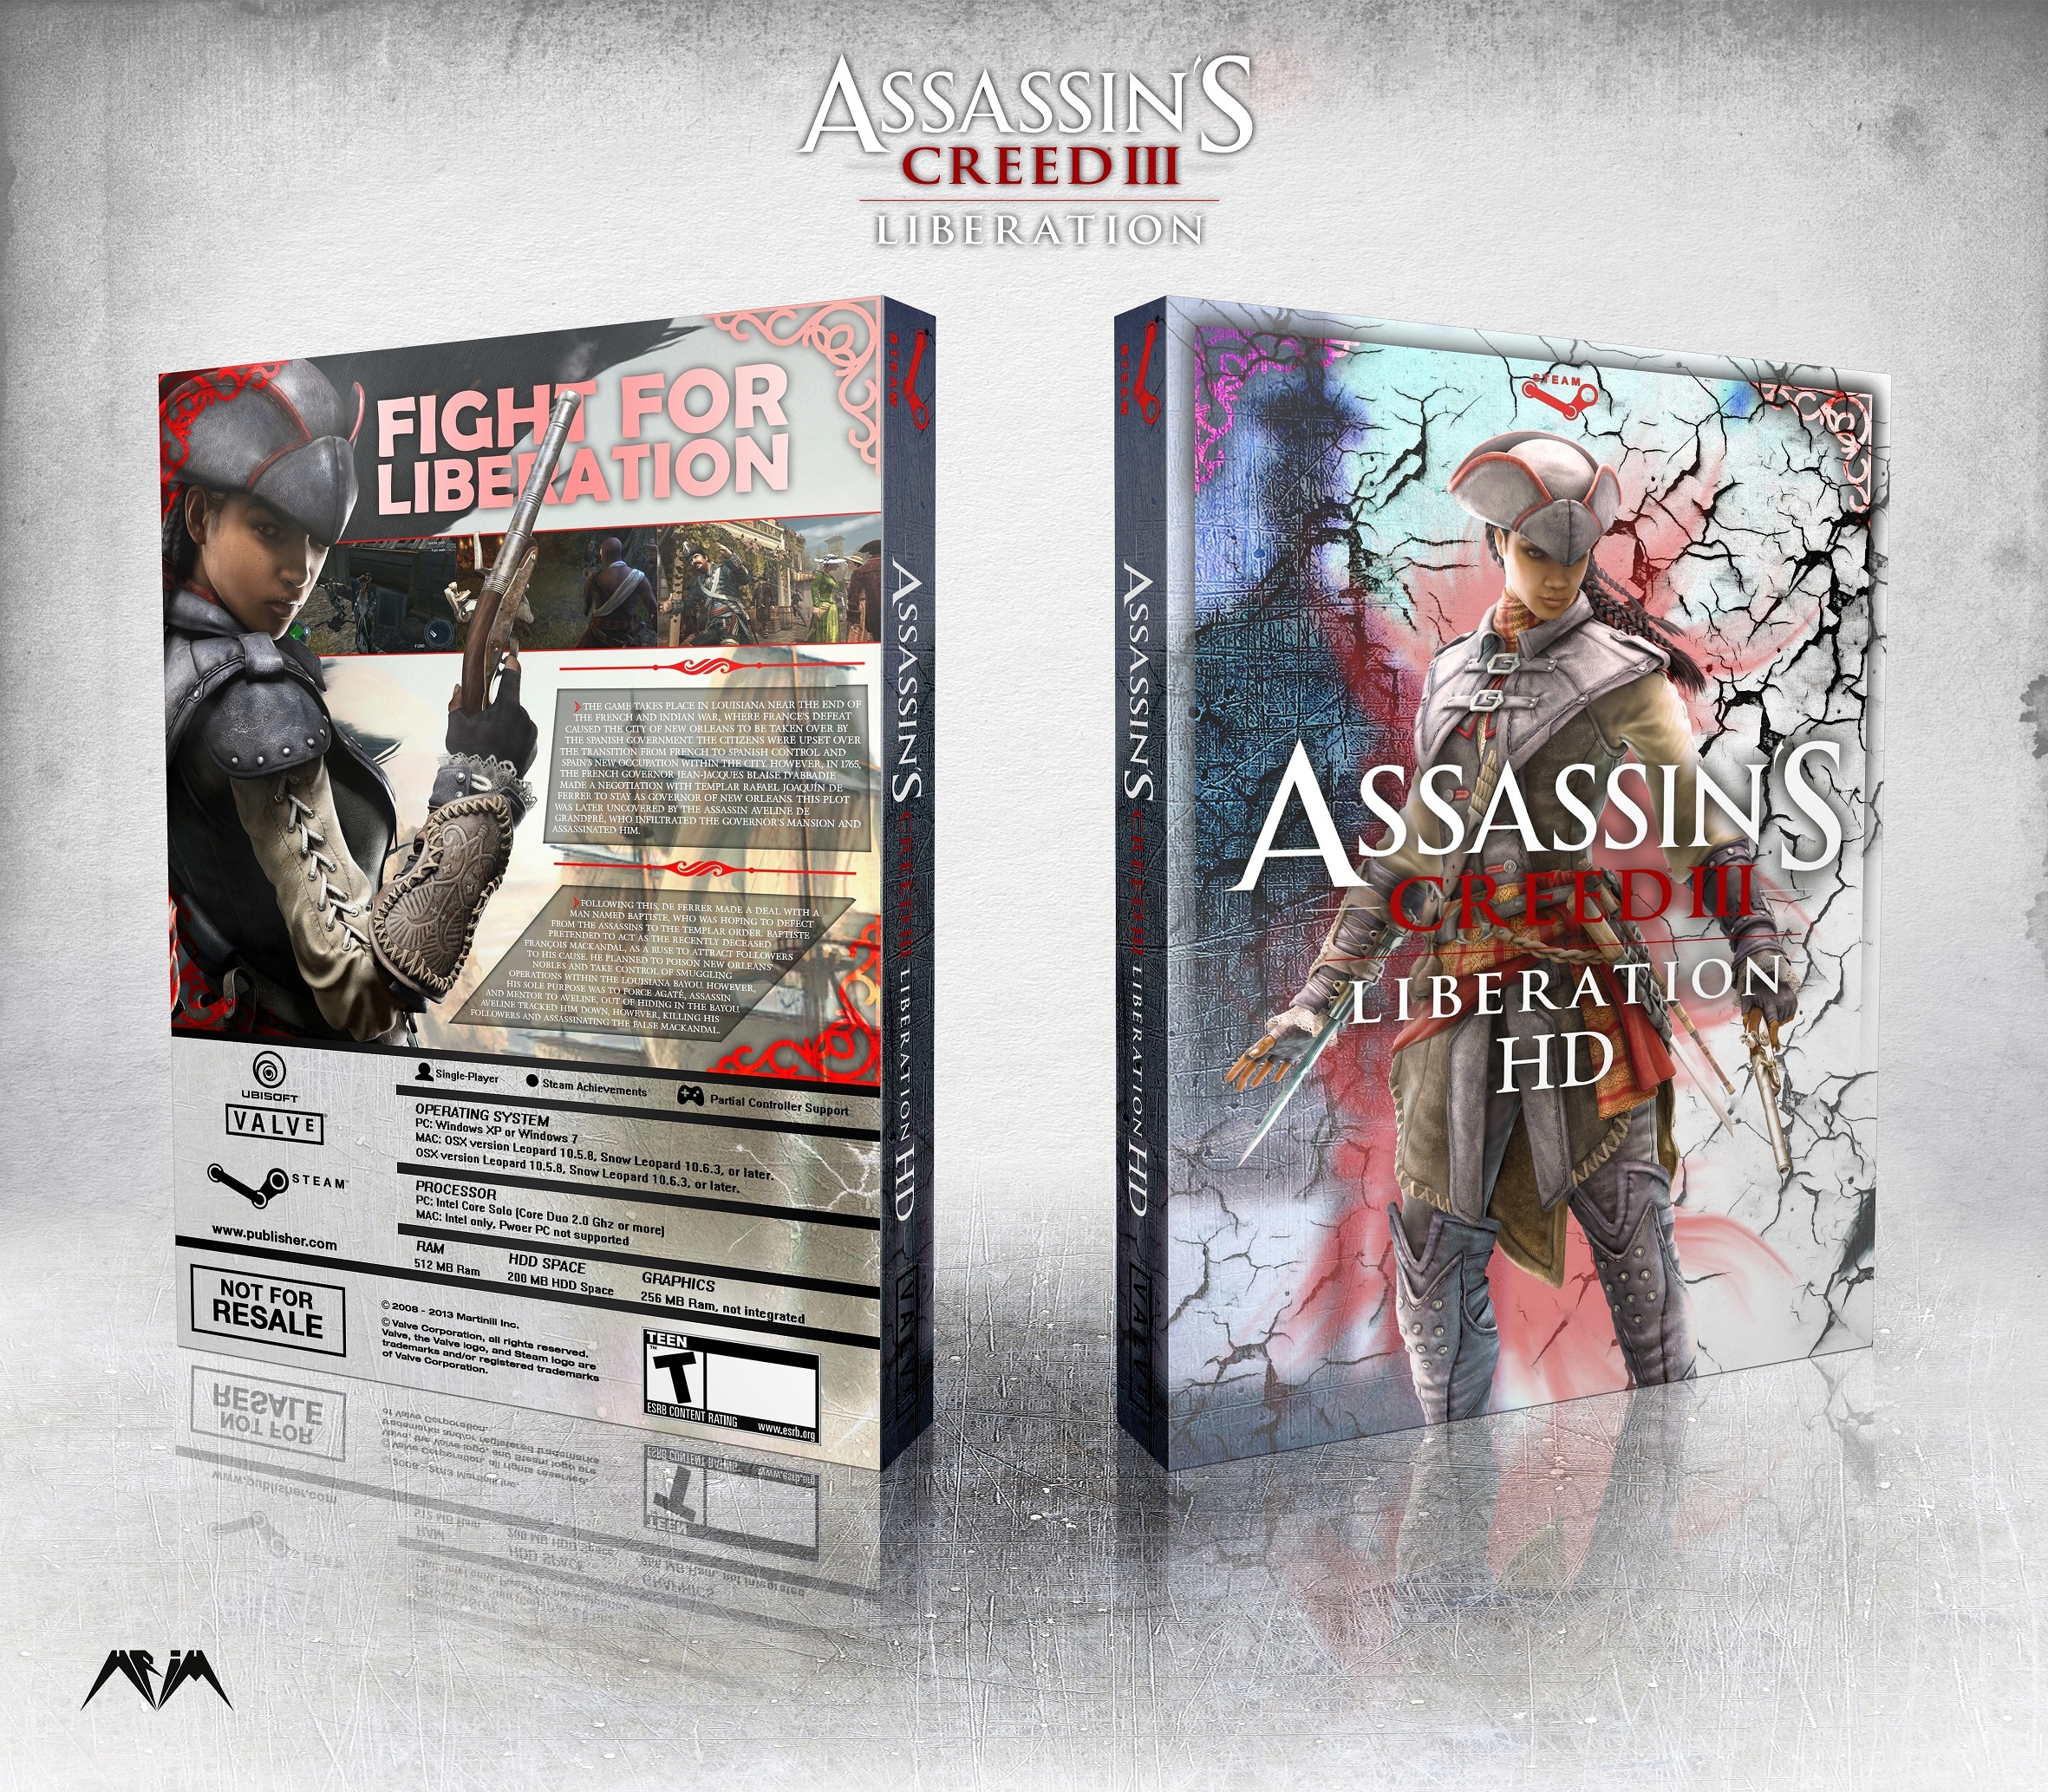 Assassins Creed: Liberation HD box cover